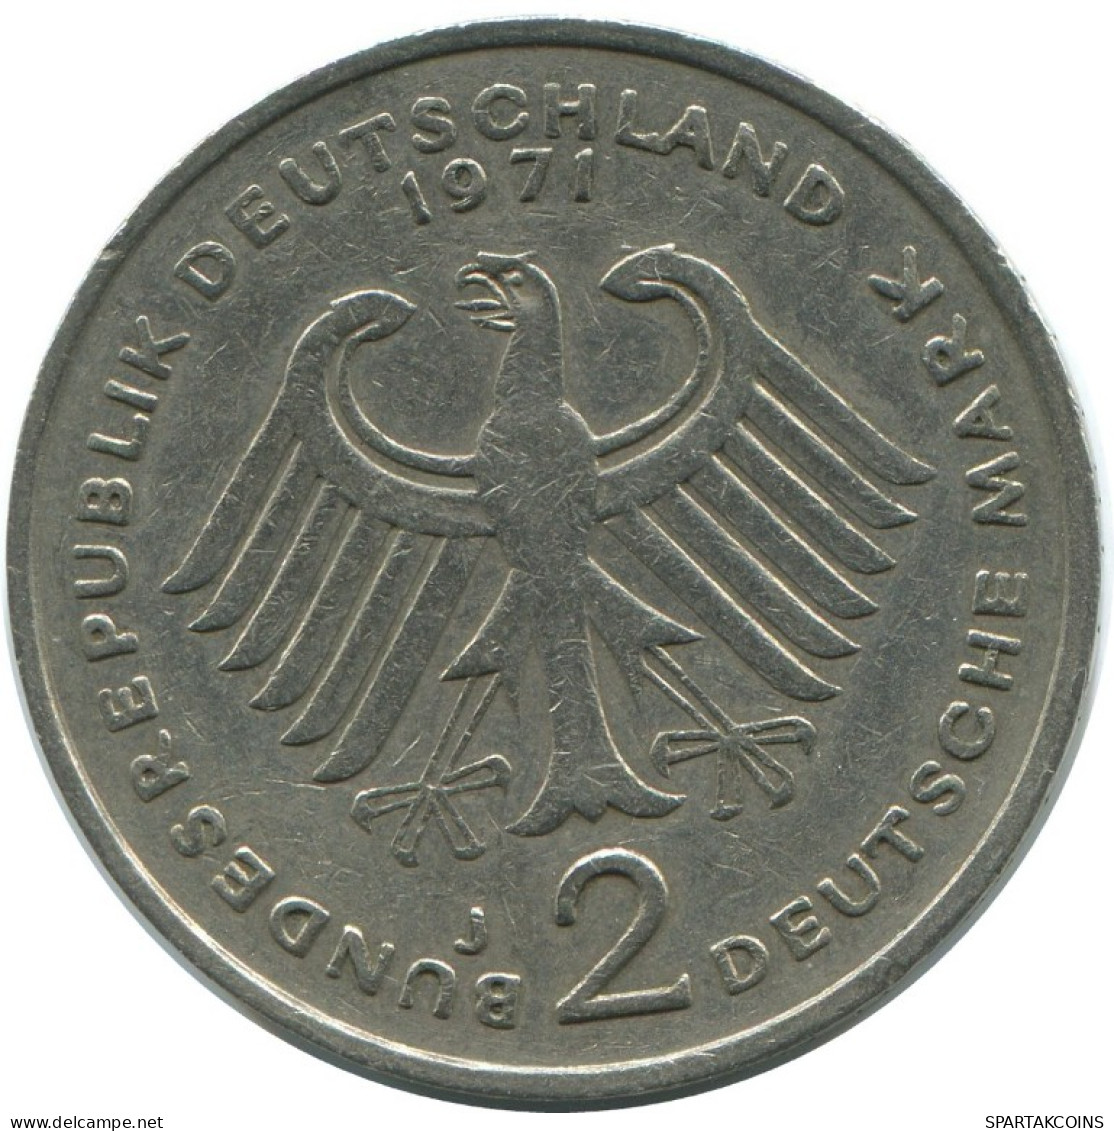 2 DM 1971 J K.ADENAUER WEST & UNIFIED GERMANY Coin #AG282.3.U.A - 2 Mark